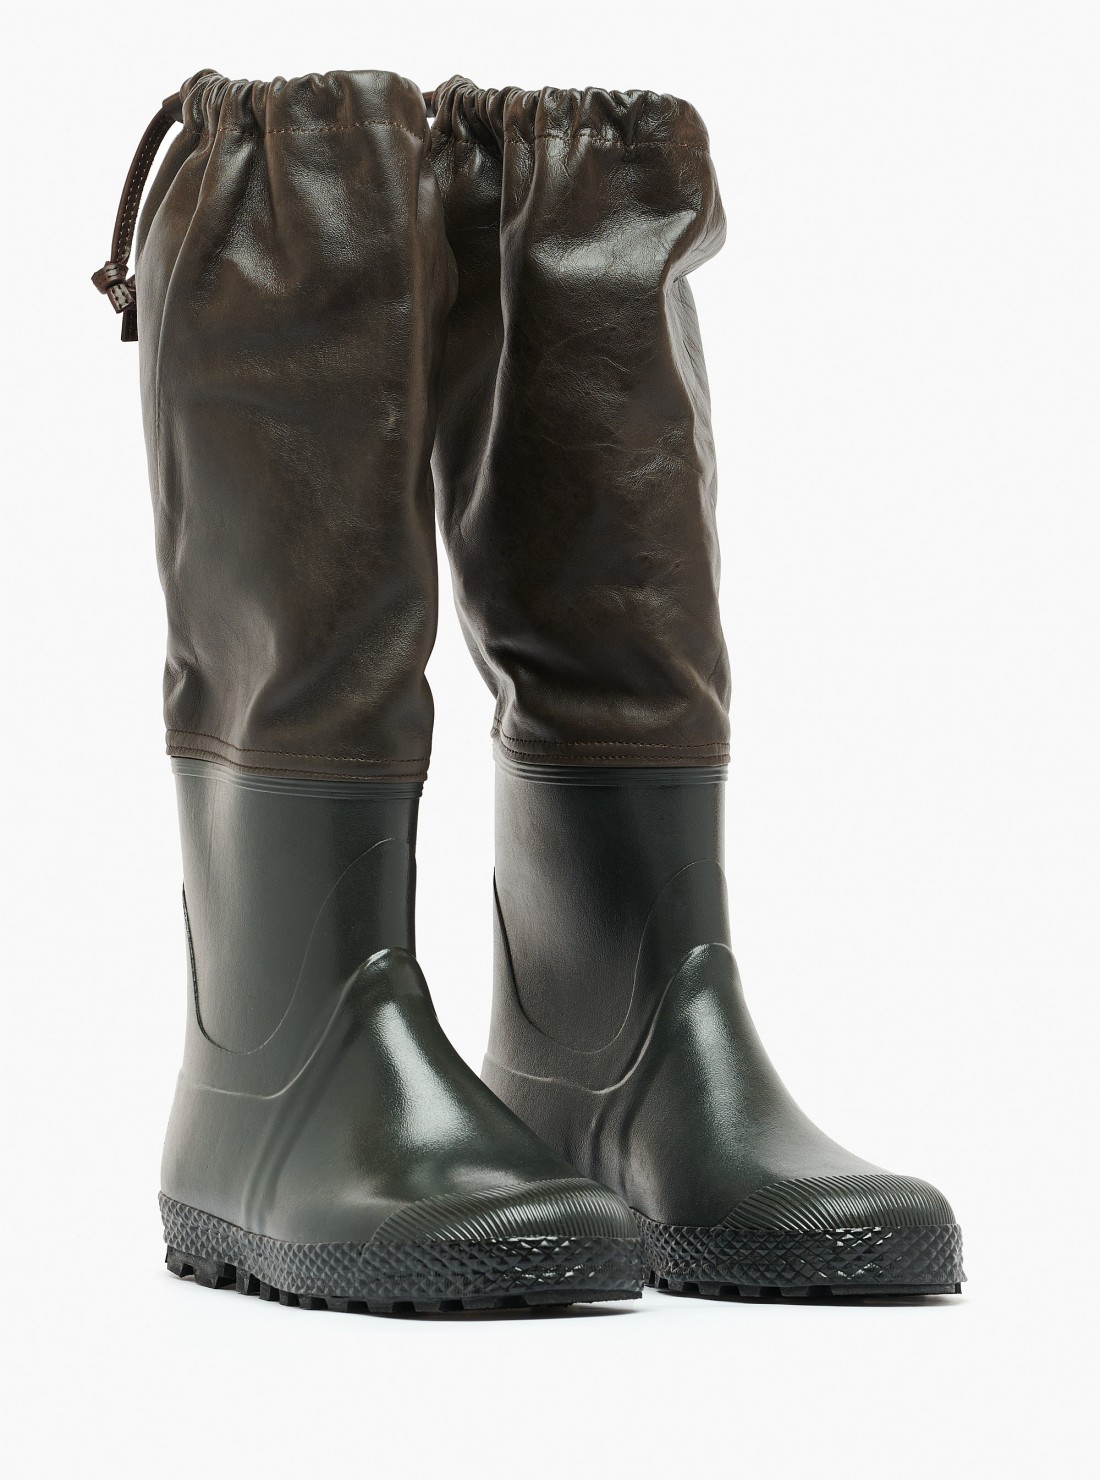 Farmers Rain Boots